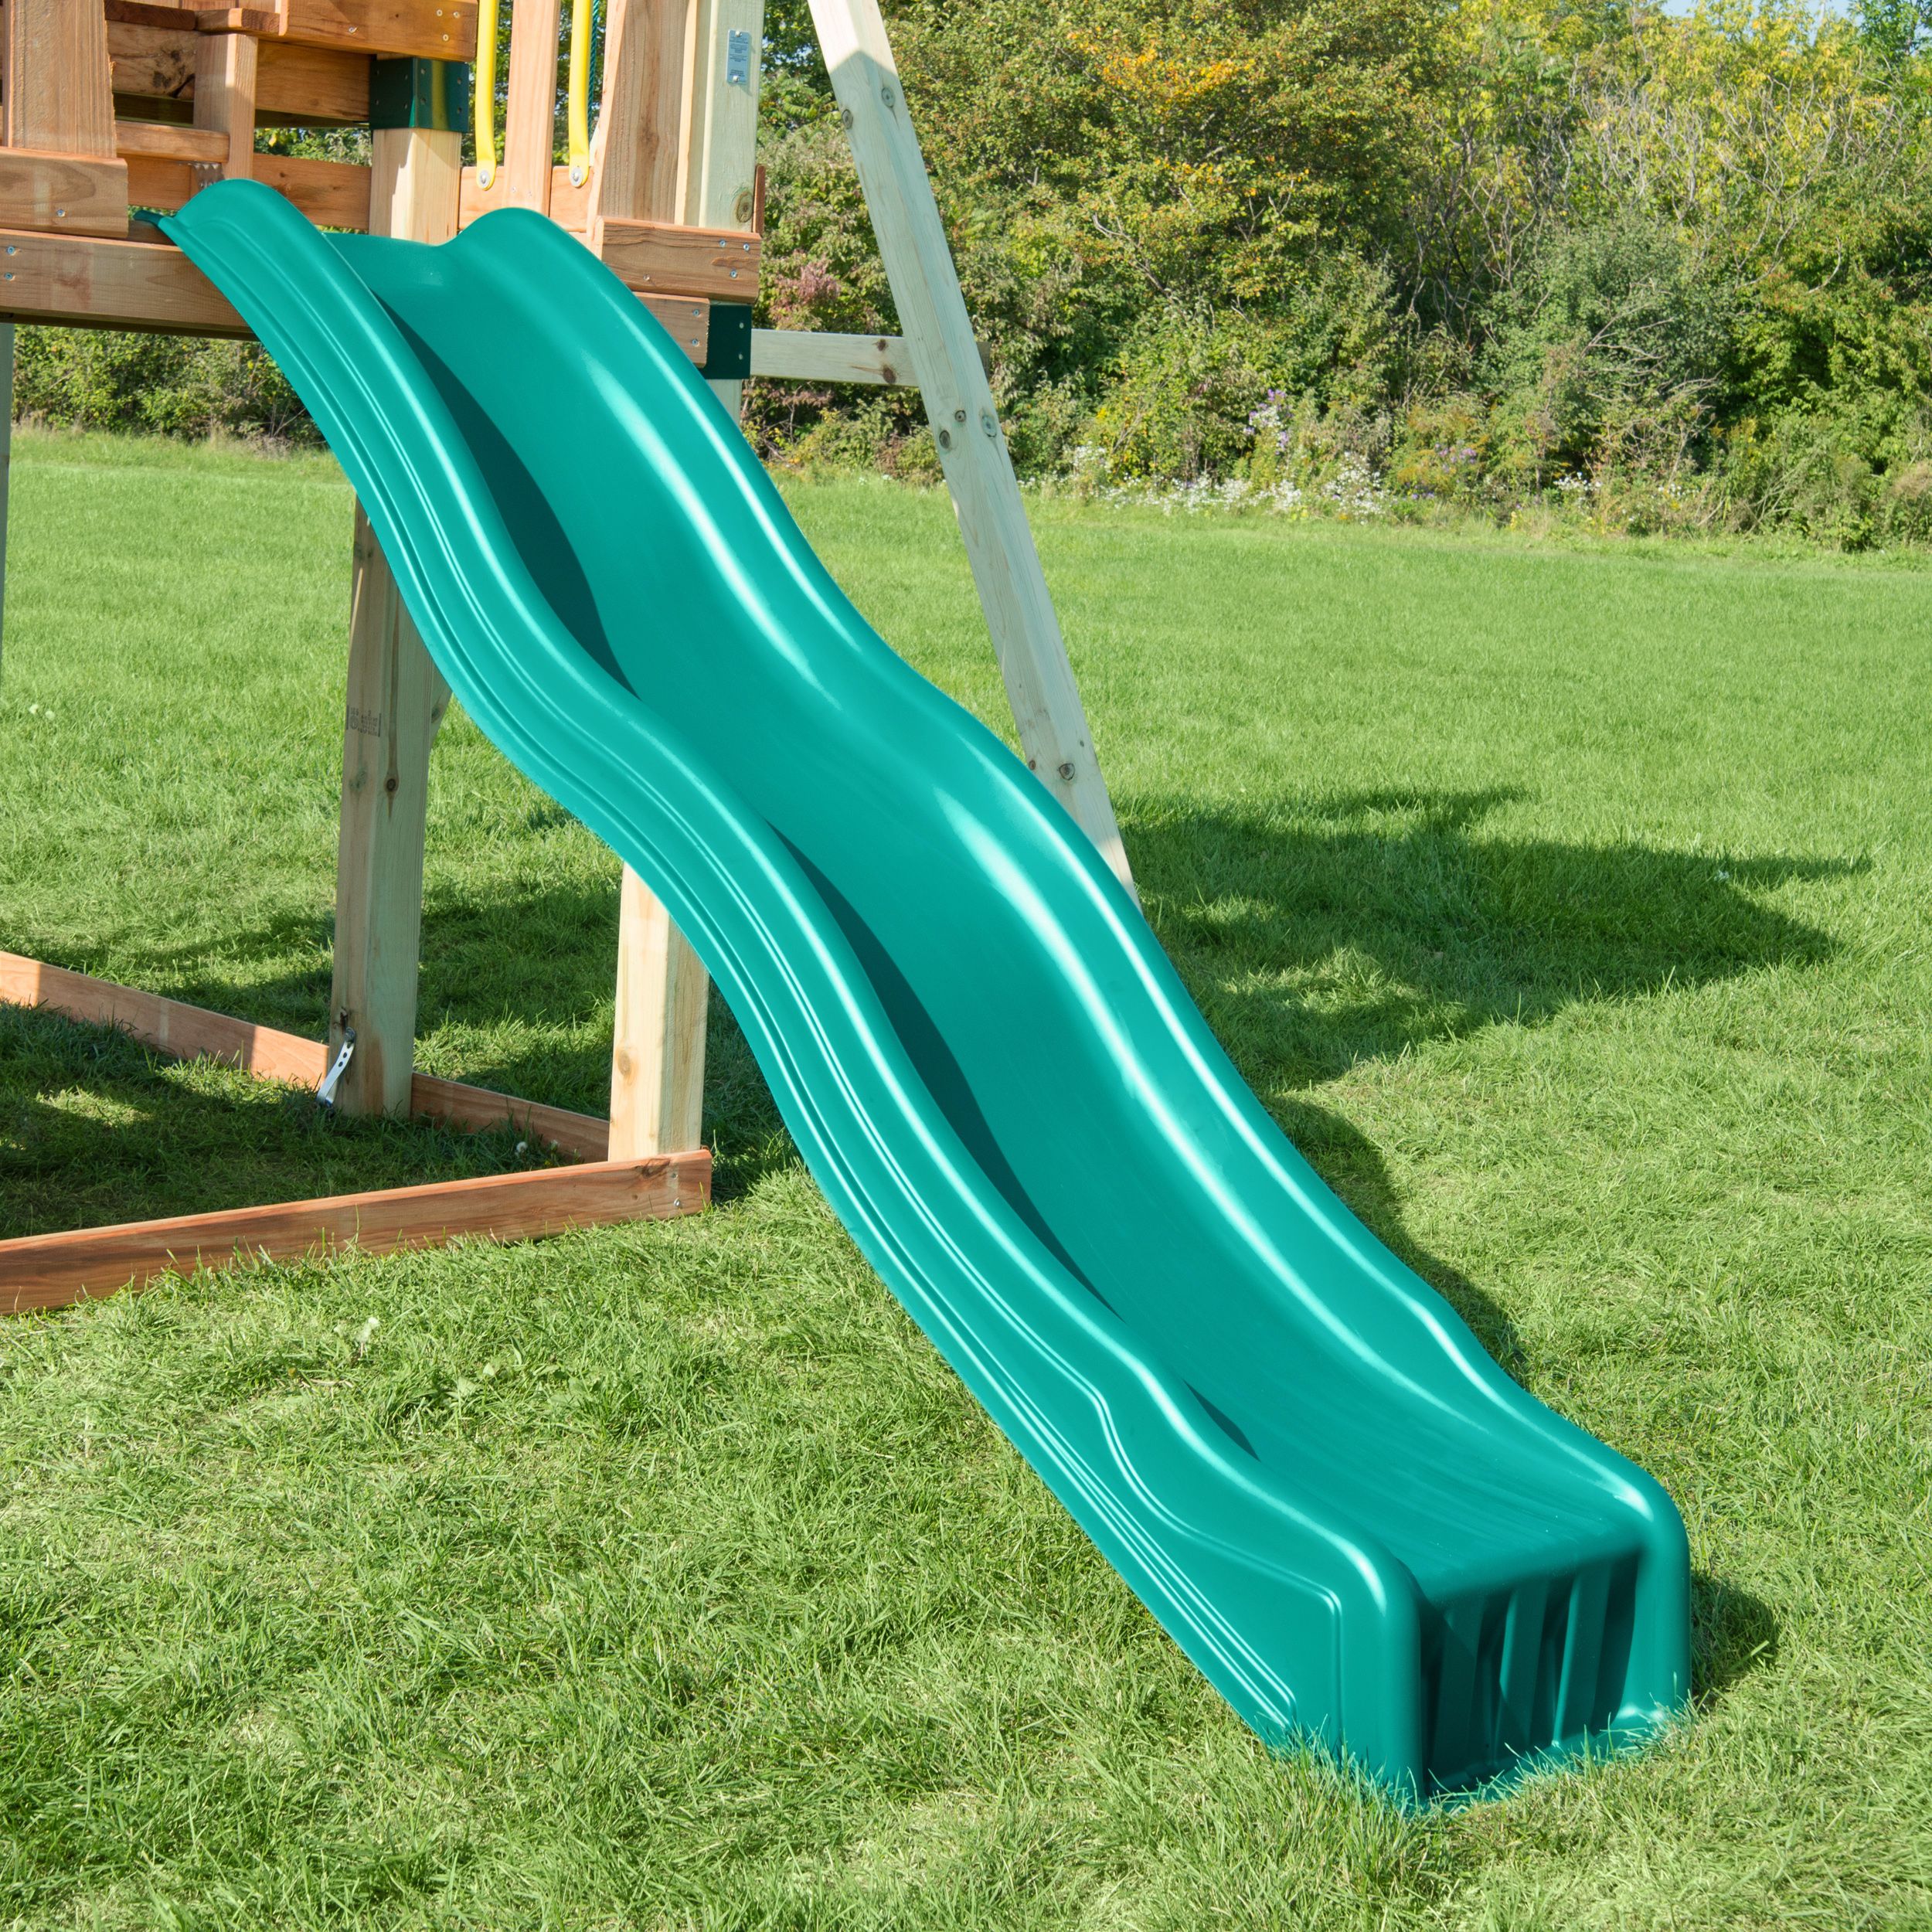 Swing-N-Slide 4 Foot Cool Wave Slide with Lifetime Warranty, Green - image 2 of 6